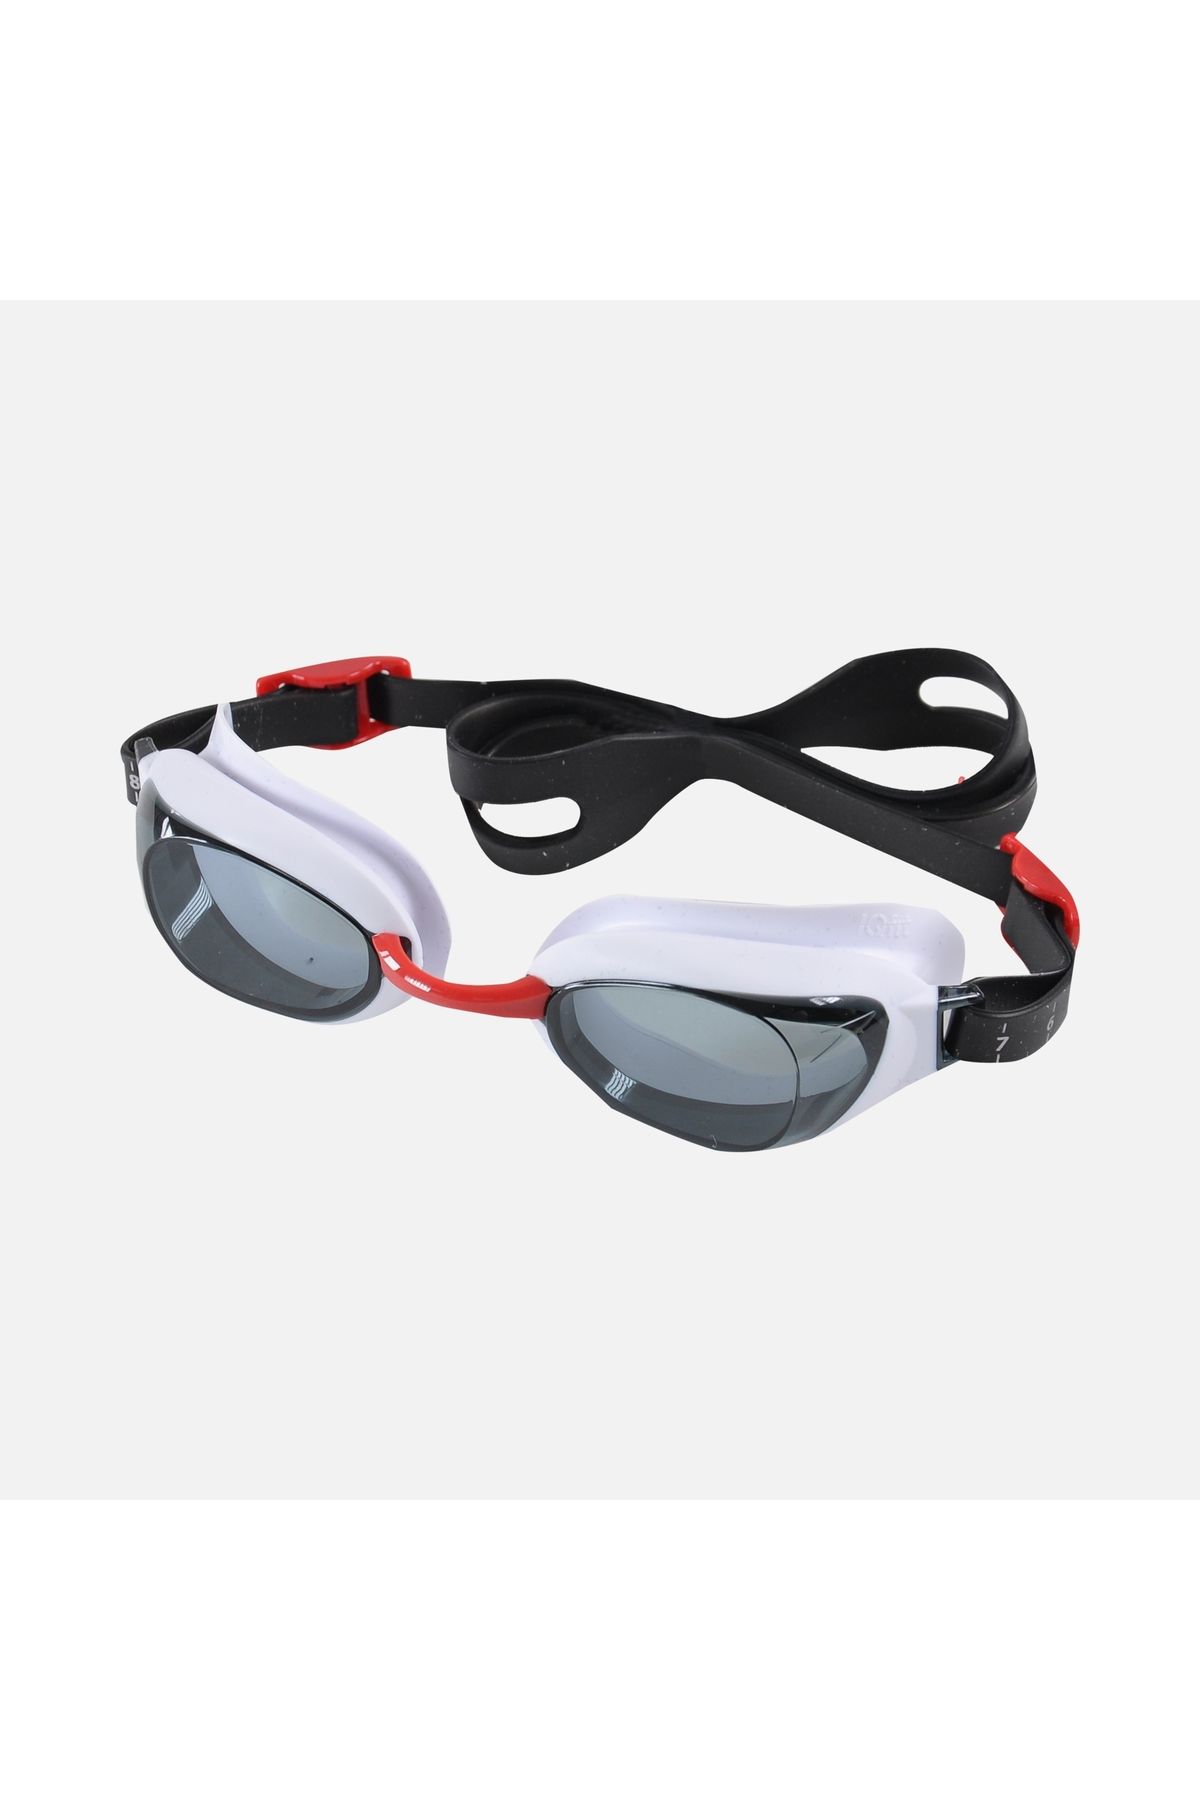 SPEEDO Aquapure Yüzücü Gözlüğü - Kırmızı/Gri